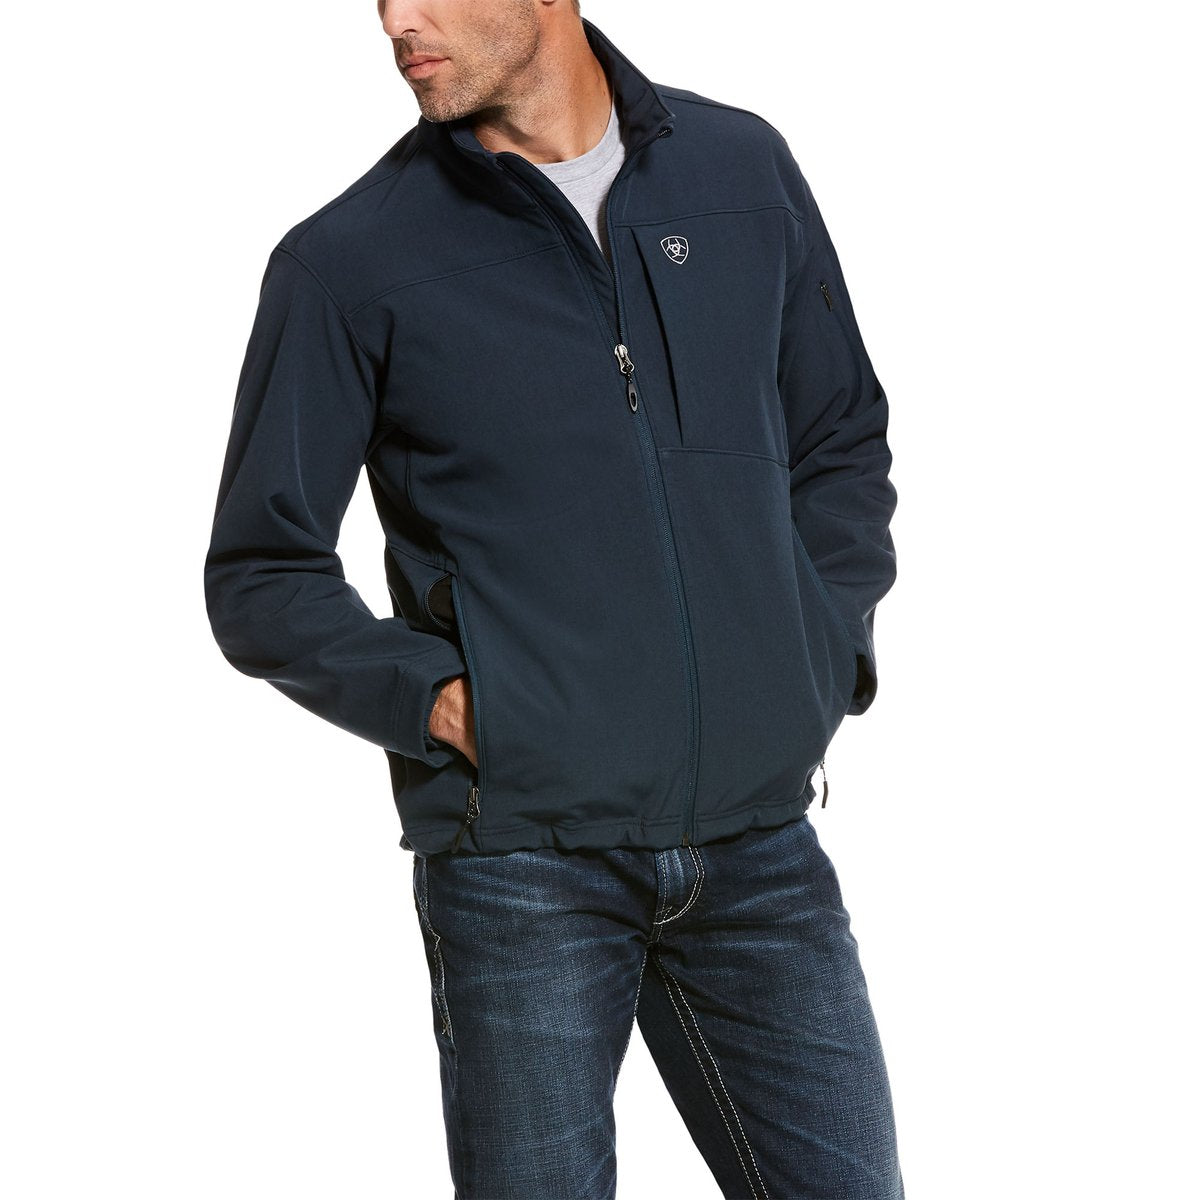 Ariat Vernon 2.0 Men's Softshell Jacket